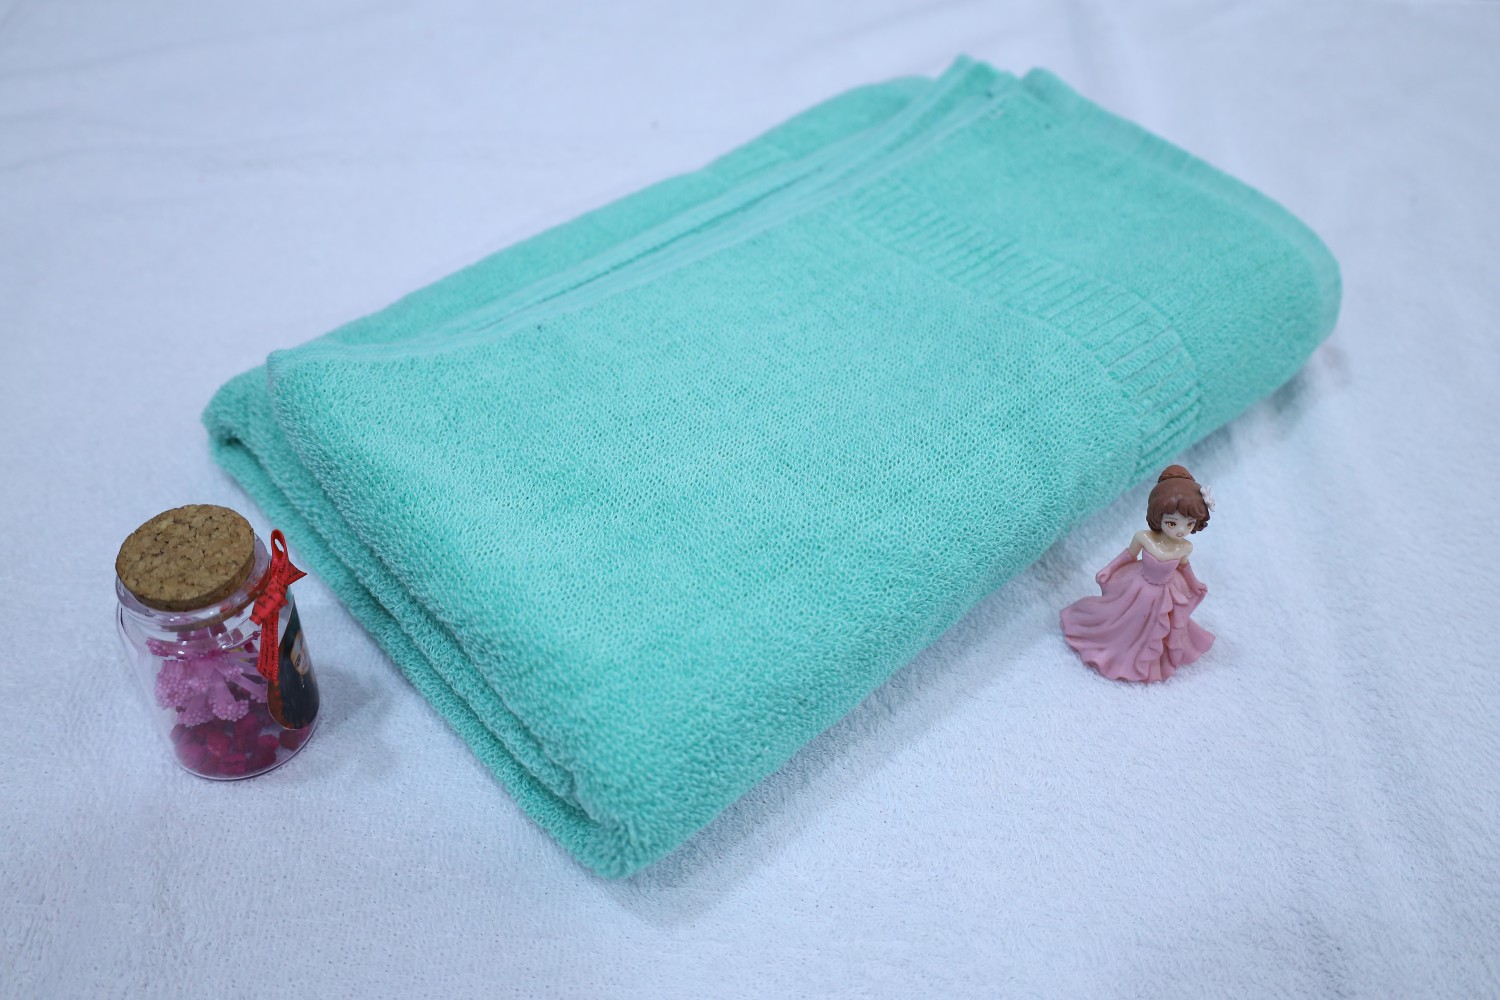 Taurusent Super Soft 100% Cotton High Absorbing Turkey Bath Towel, Size: 30x60 inches (450 GSM) - Pack of 1(Aqua)